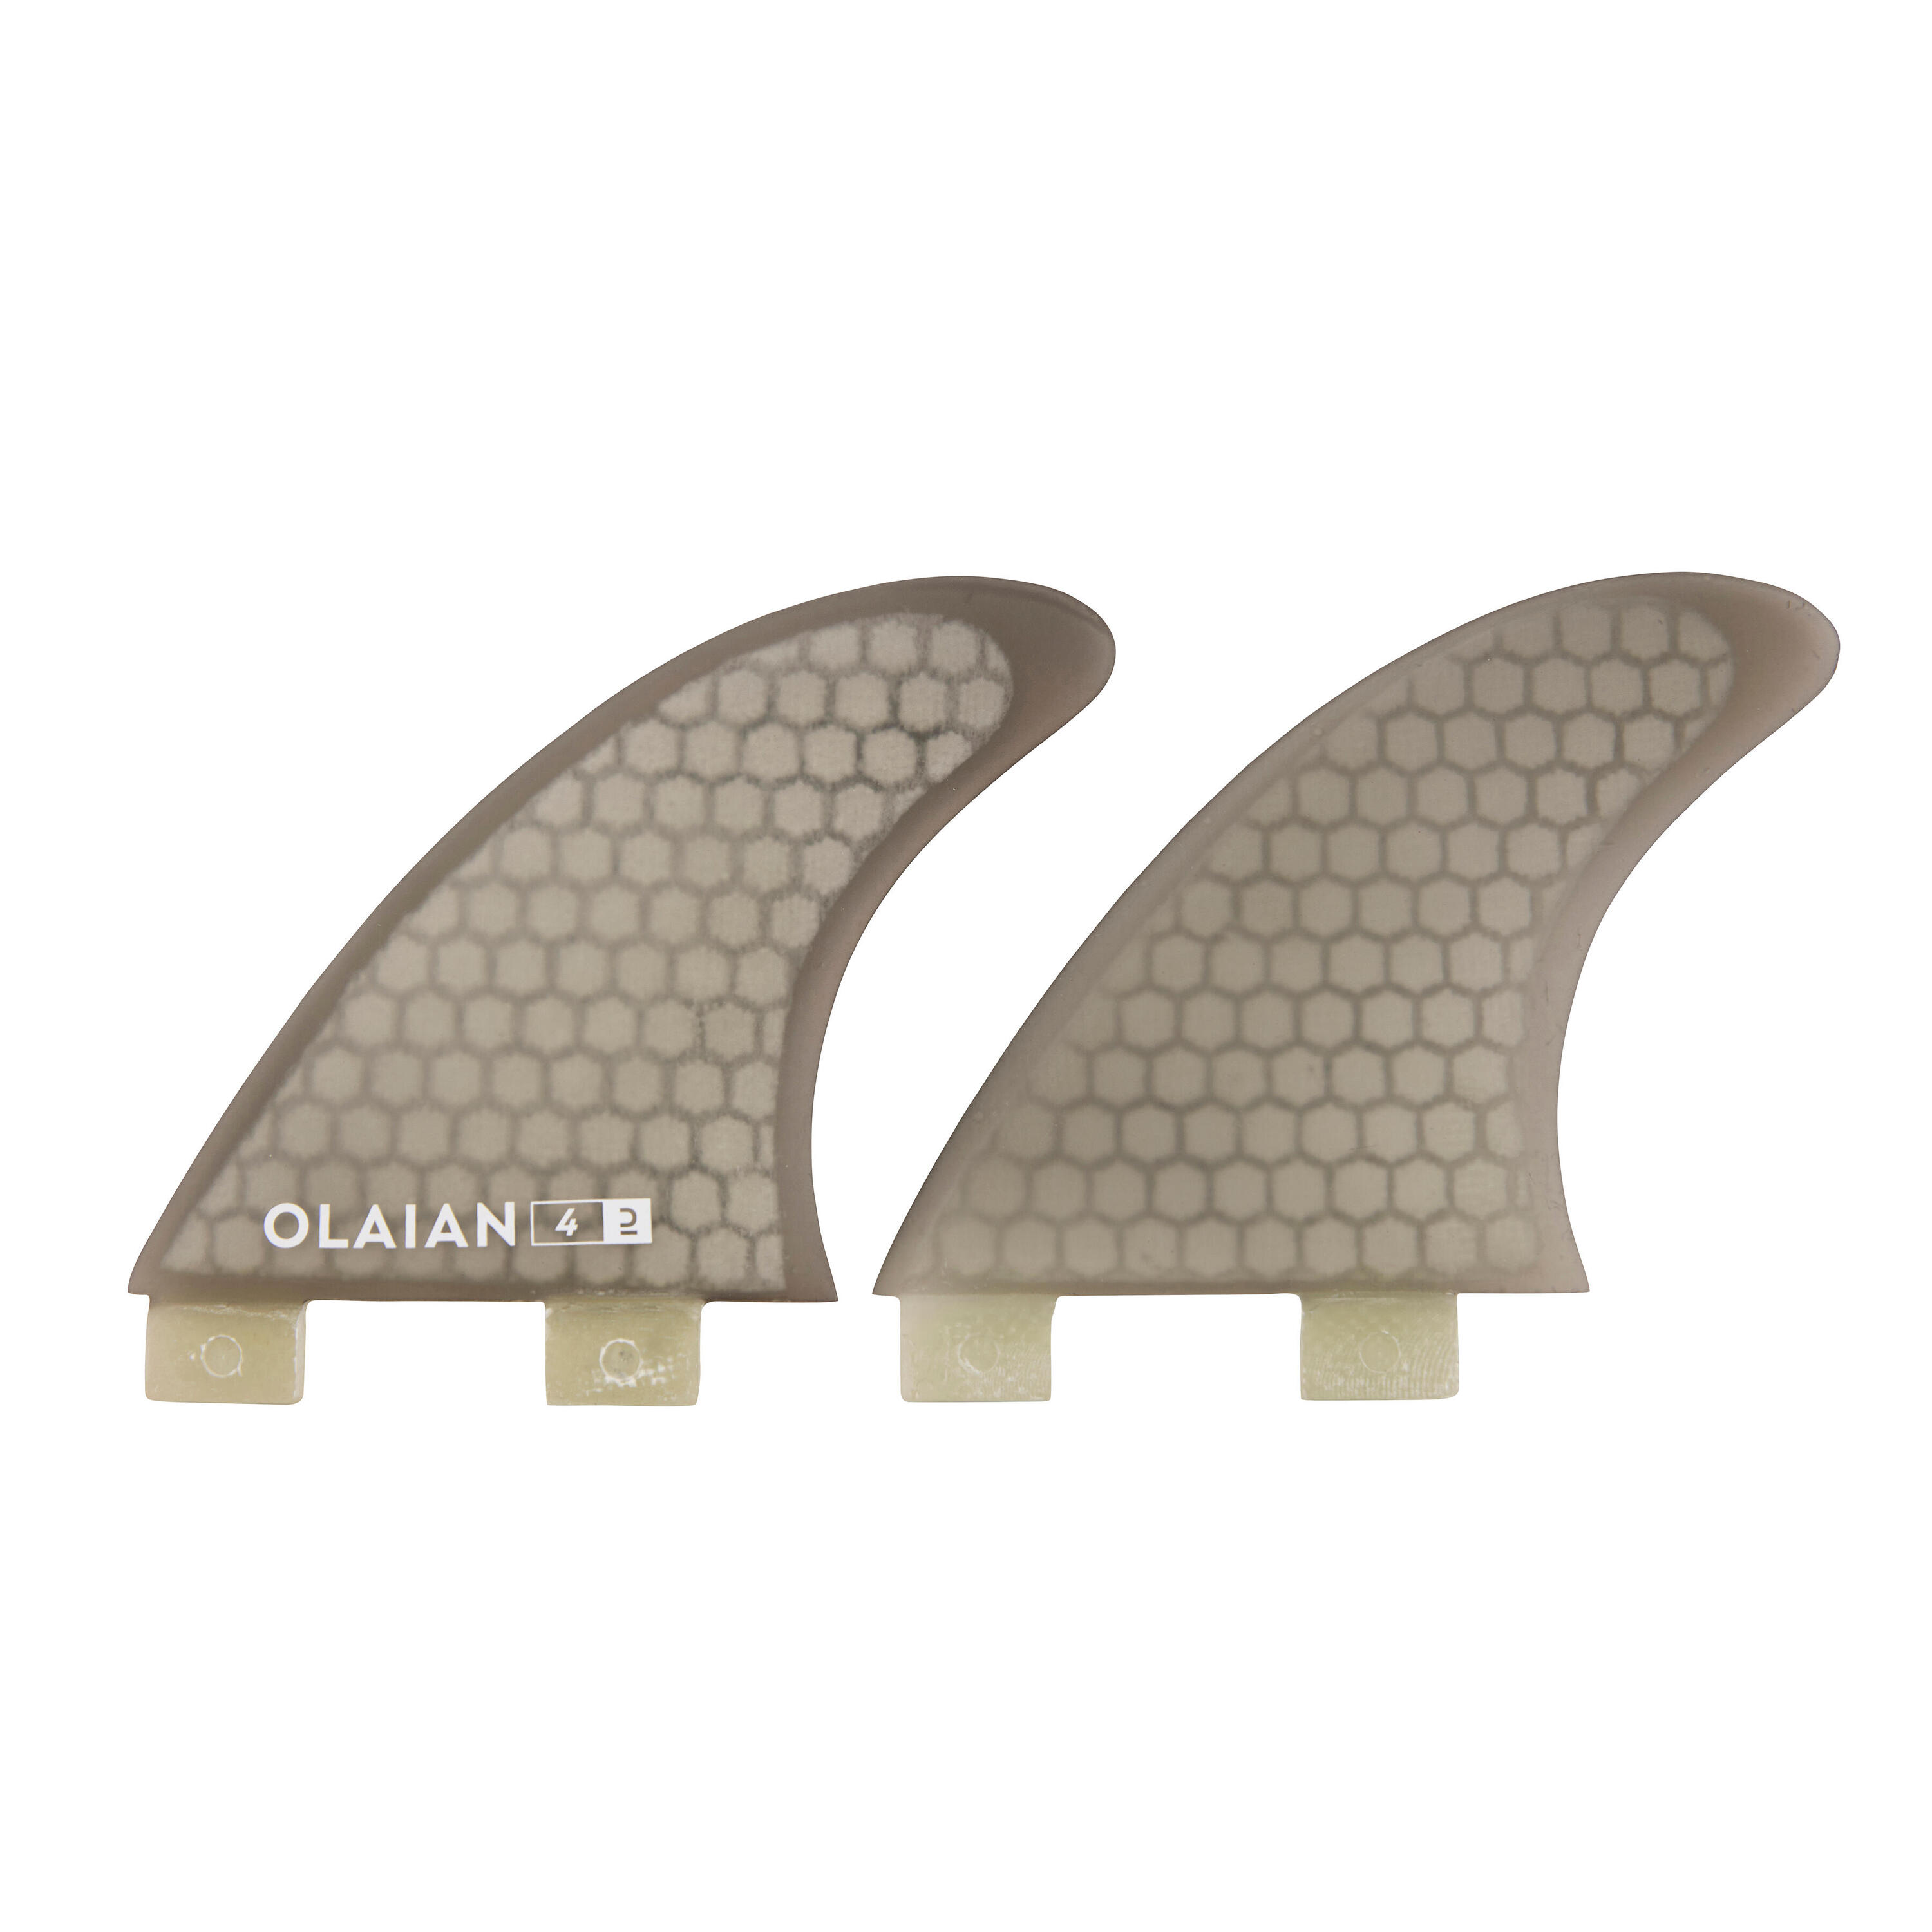 OLAIAN 2 side fins 4" composite fins for FCS fin box.